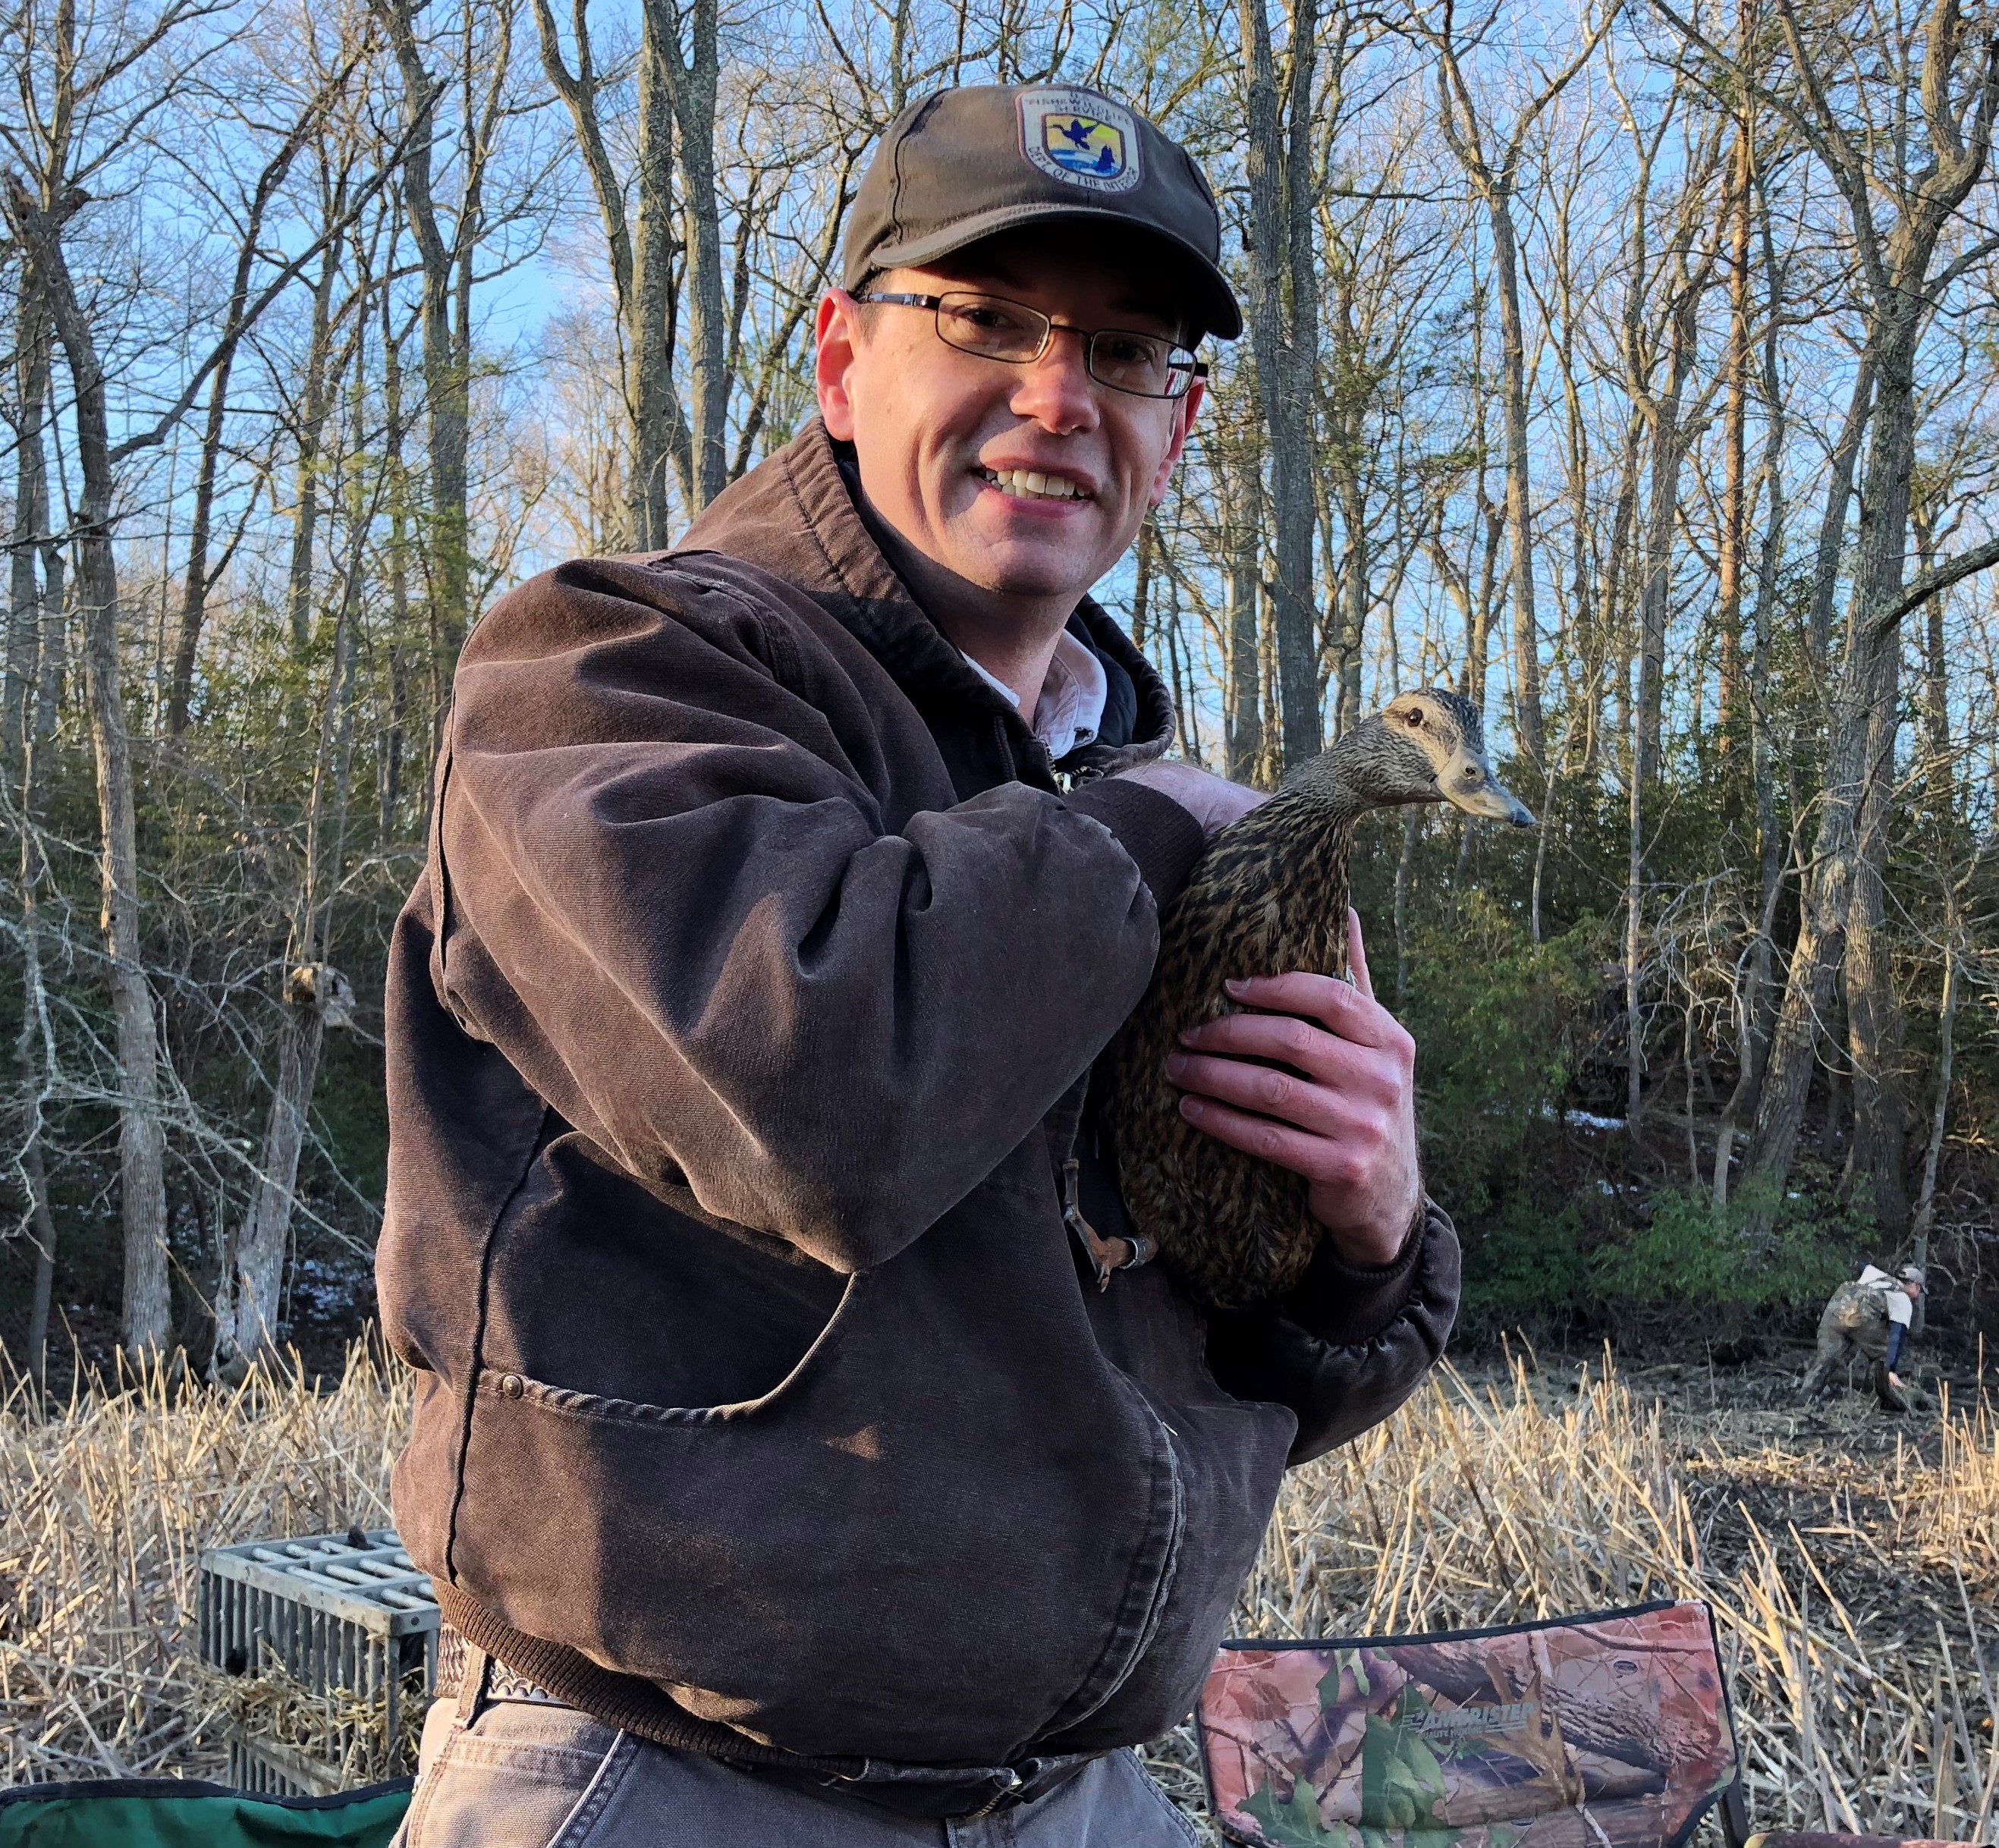 The Potomac River NWRC Biologist holds an American Black Duck.